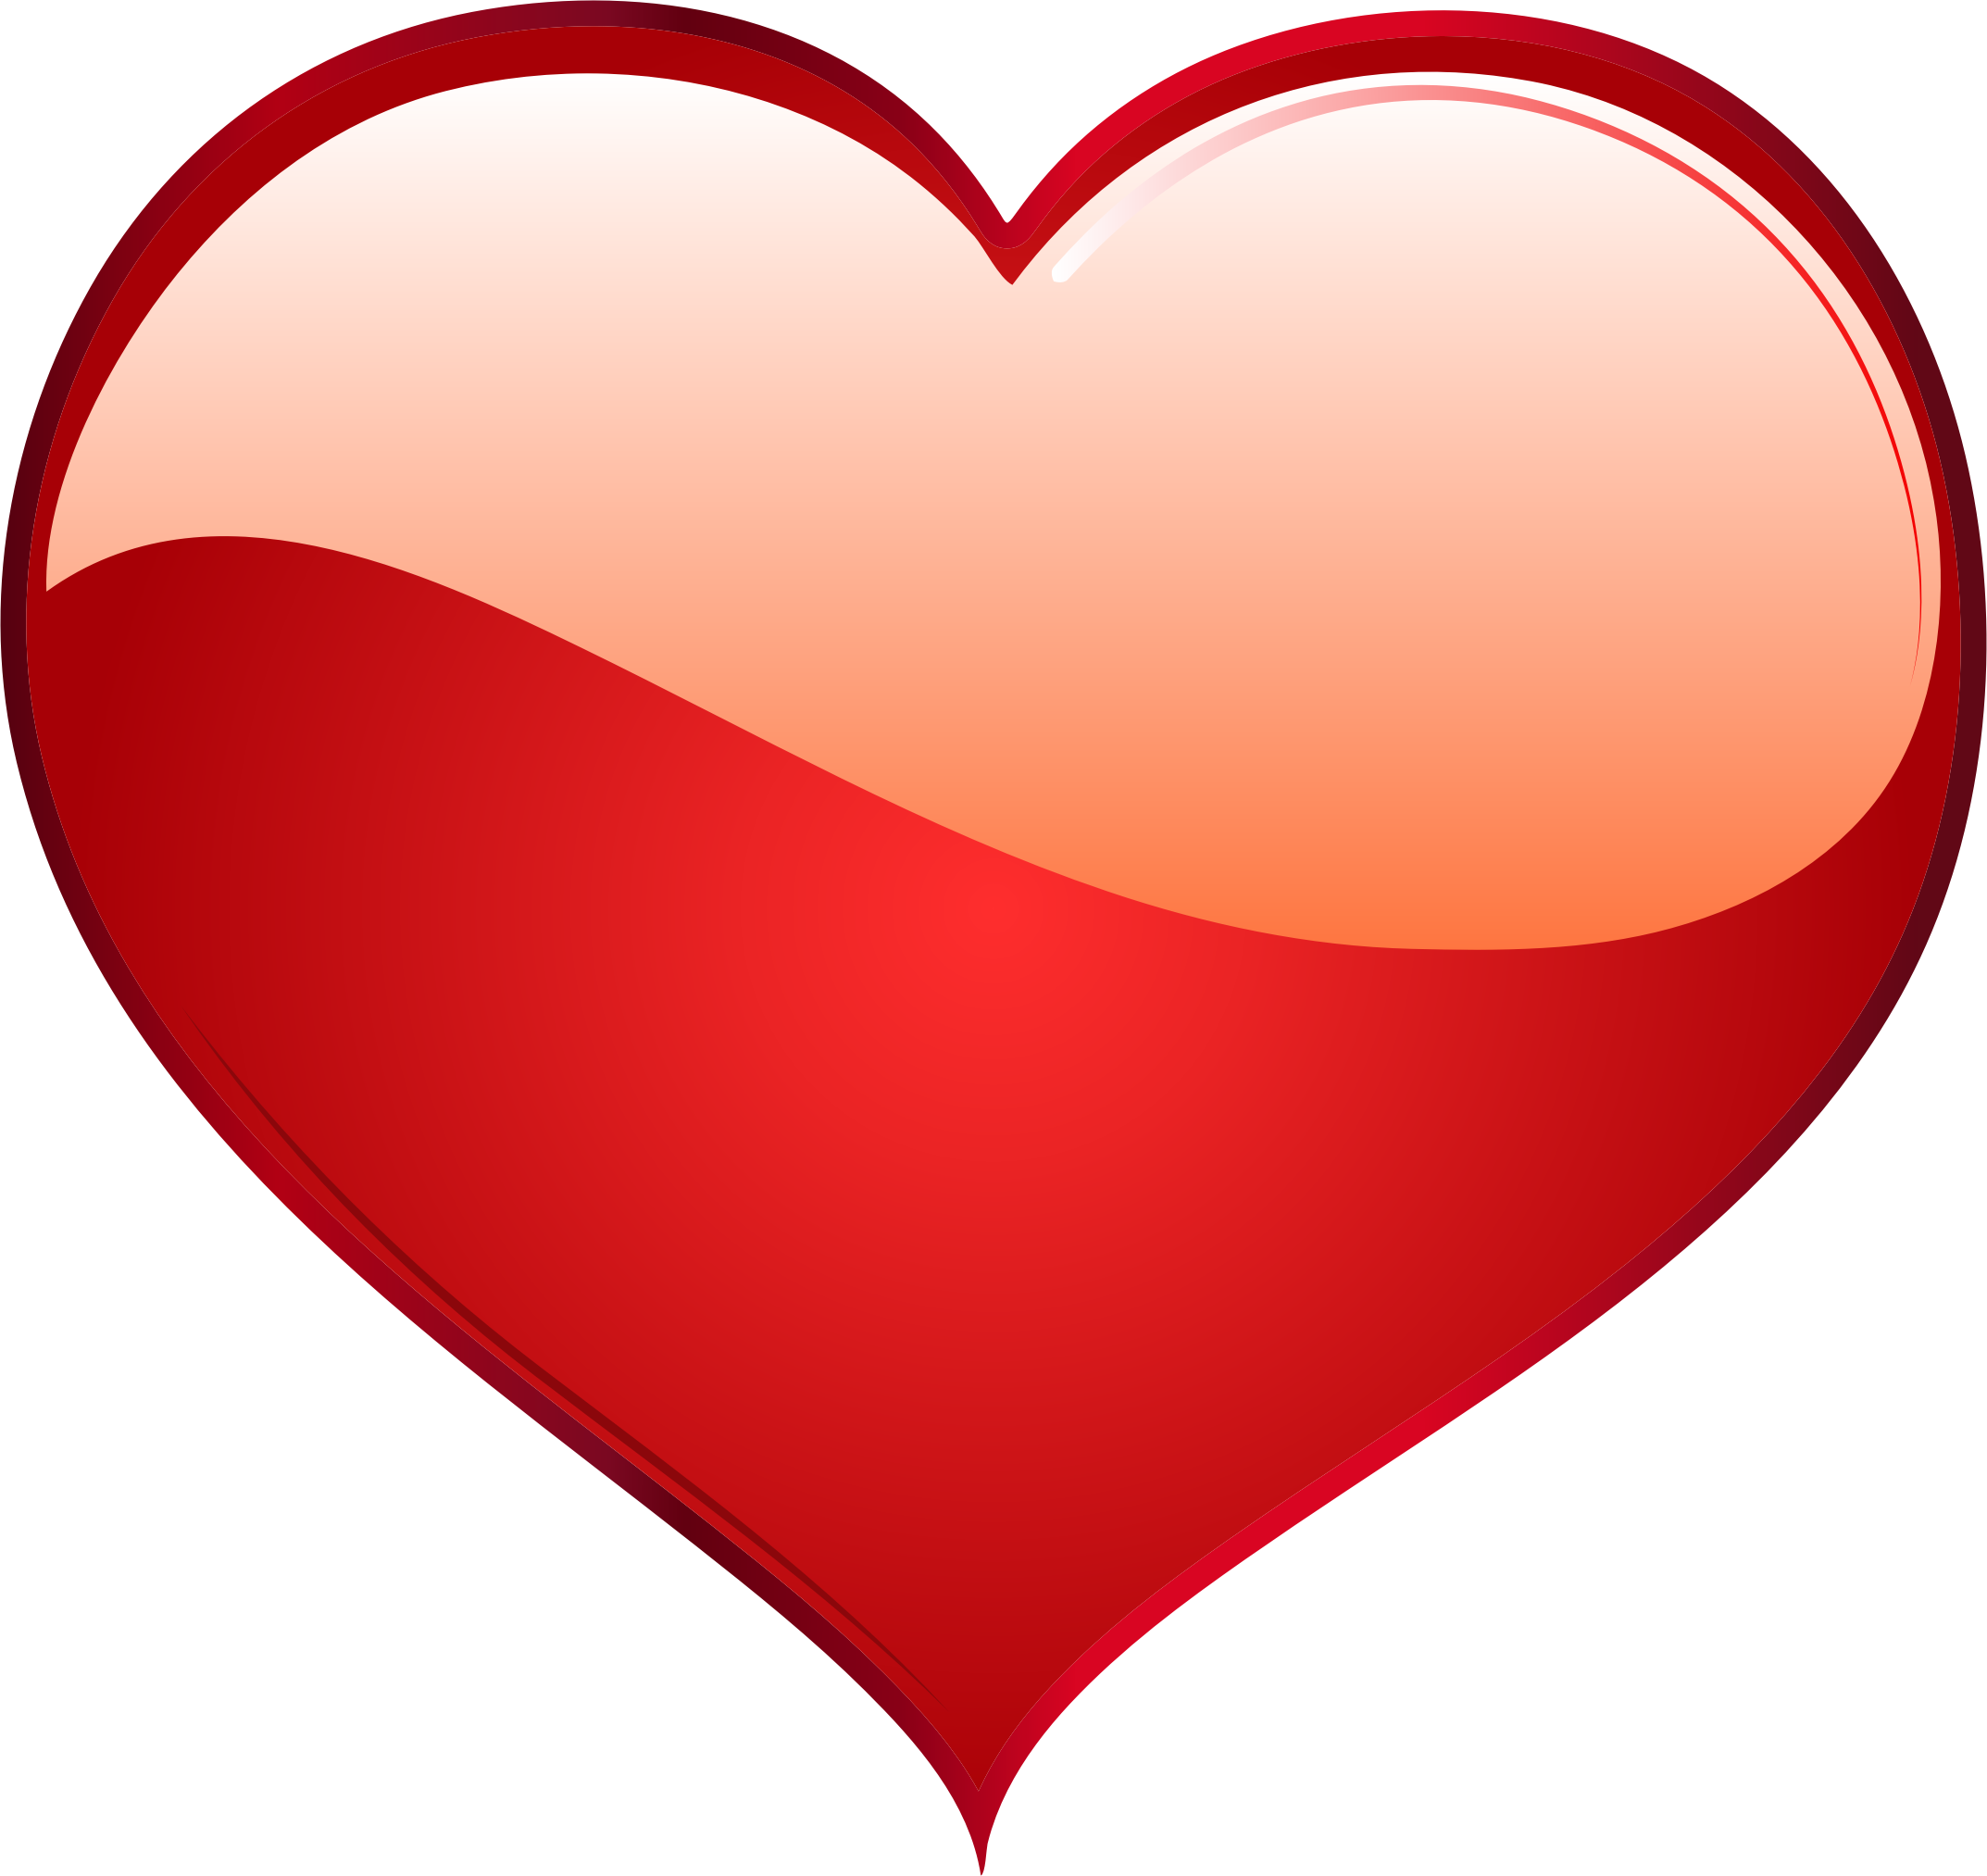 Download Red Heart Transparent HQ PNG Image | FreePNGImg